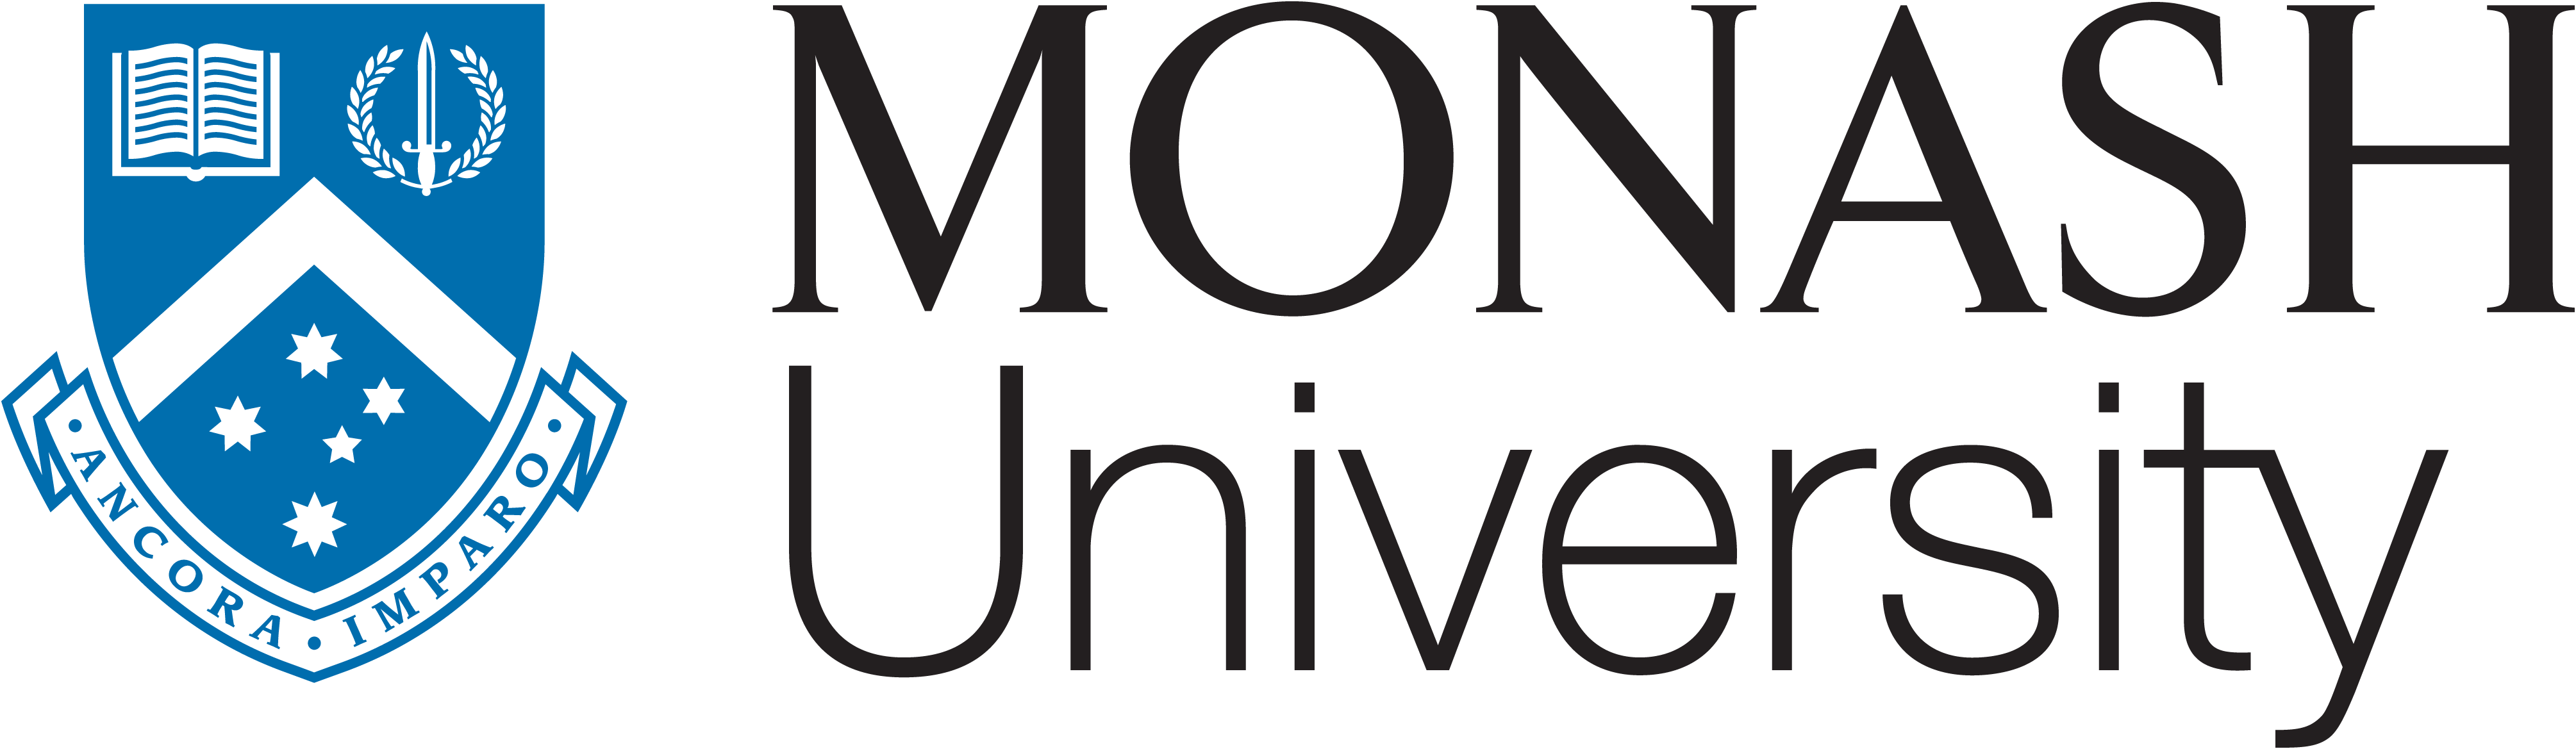 Monash University Engineering Hybrid Education Partnership | 2U